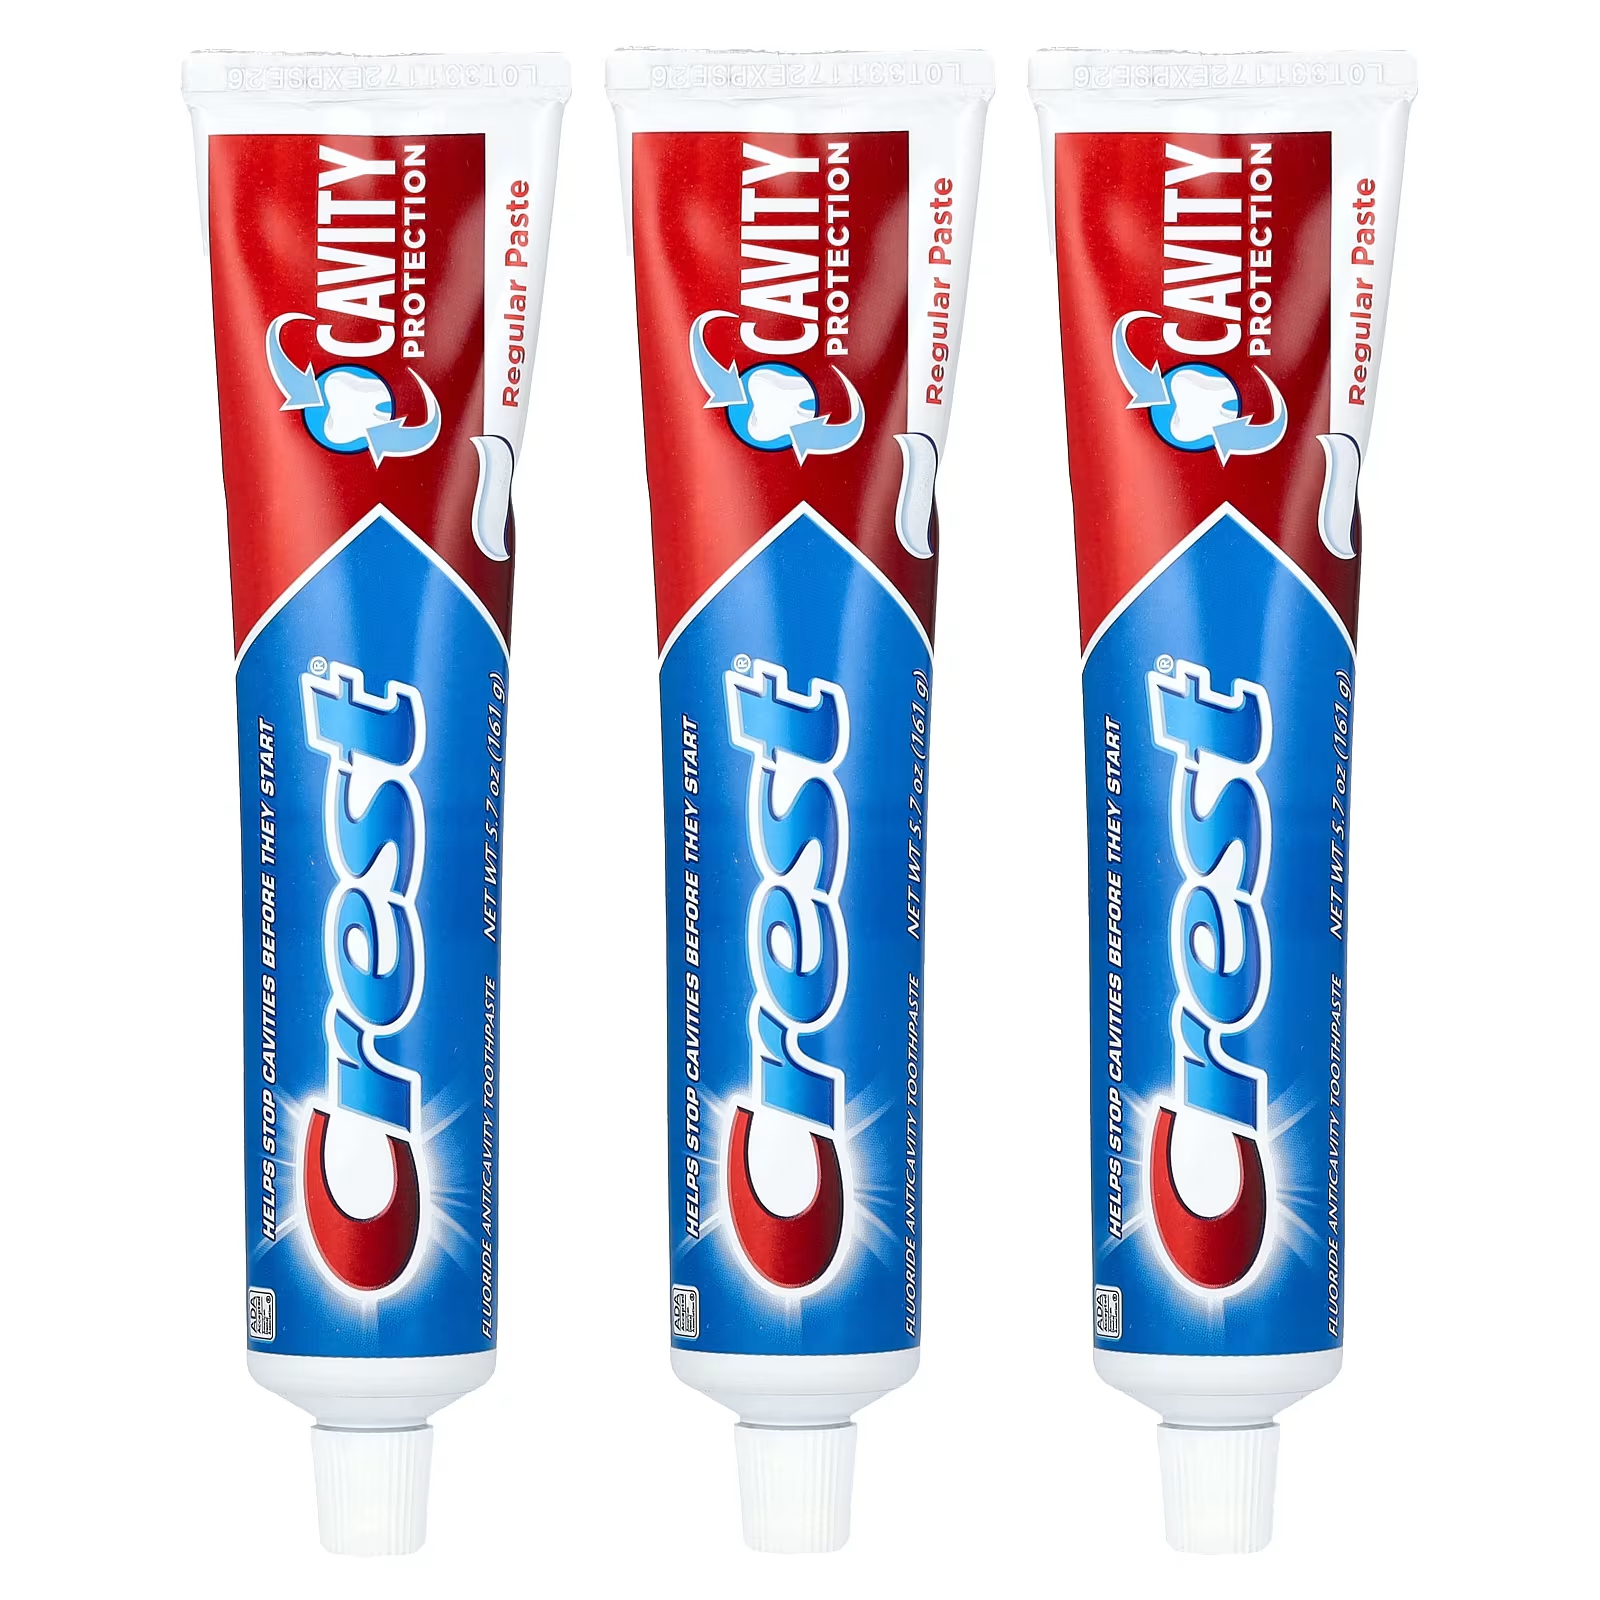 Зубная паста Crest Cavity Protection с фтором против кариеса, 3 упаковки по 161 г crest 3d white brilliance зубная паста с фтором против кариеса 99 г 3 5 унции